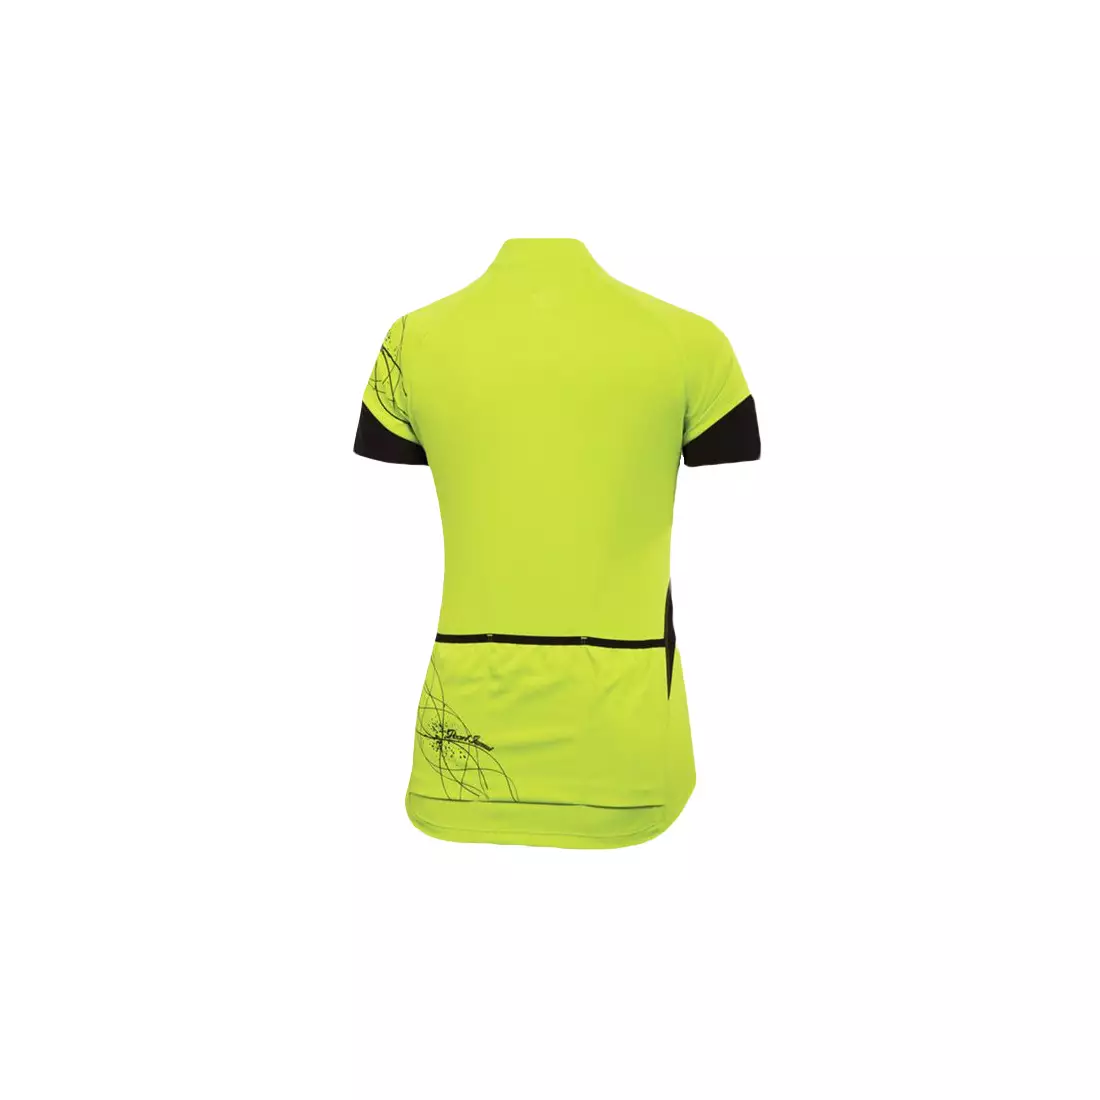 PEARL IZUMI - 11221121-667 - SUGAR - women's cycling jersey